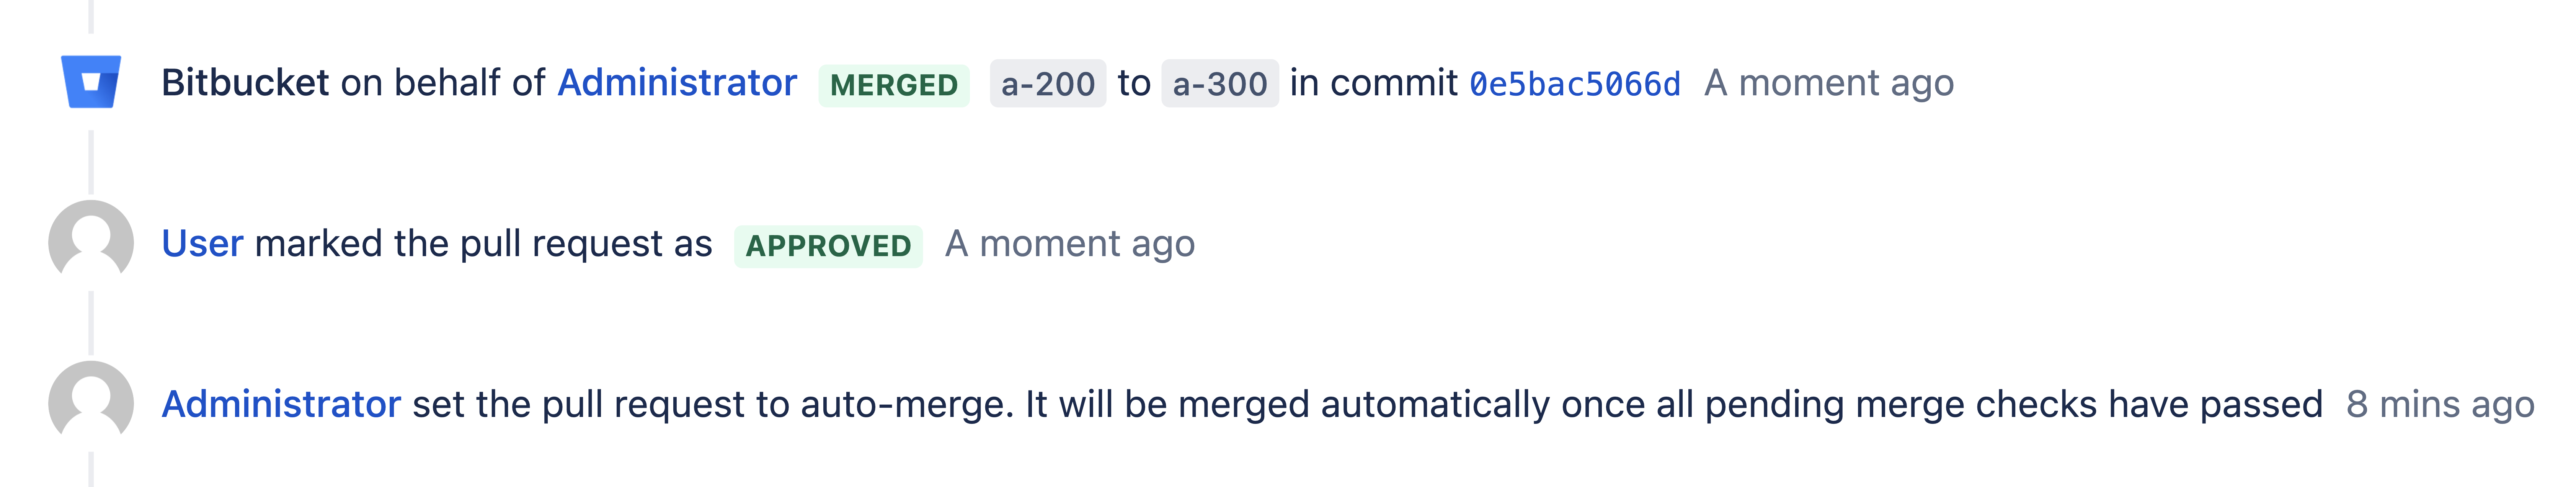 Bitbucket auto-merges pull request